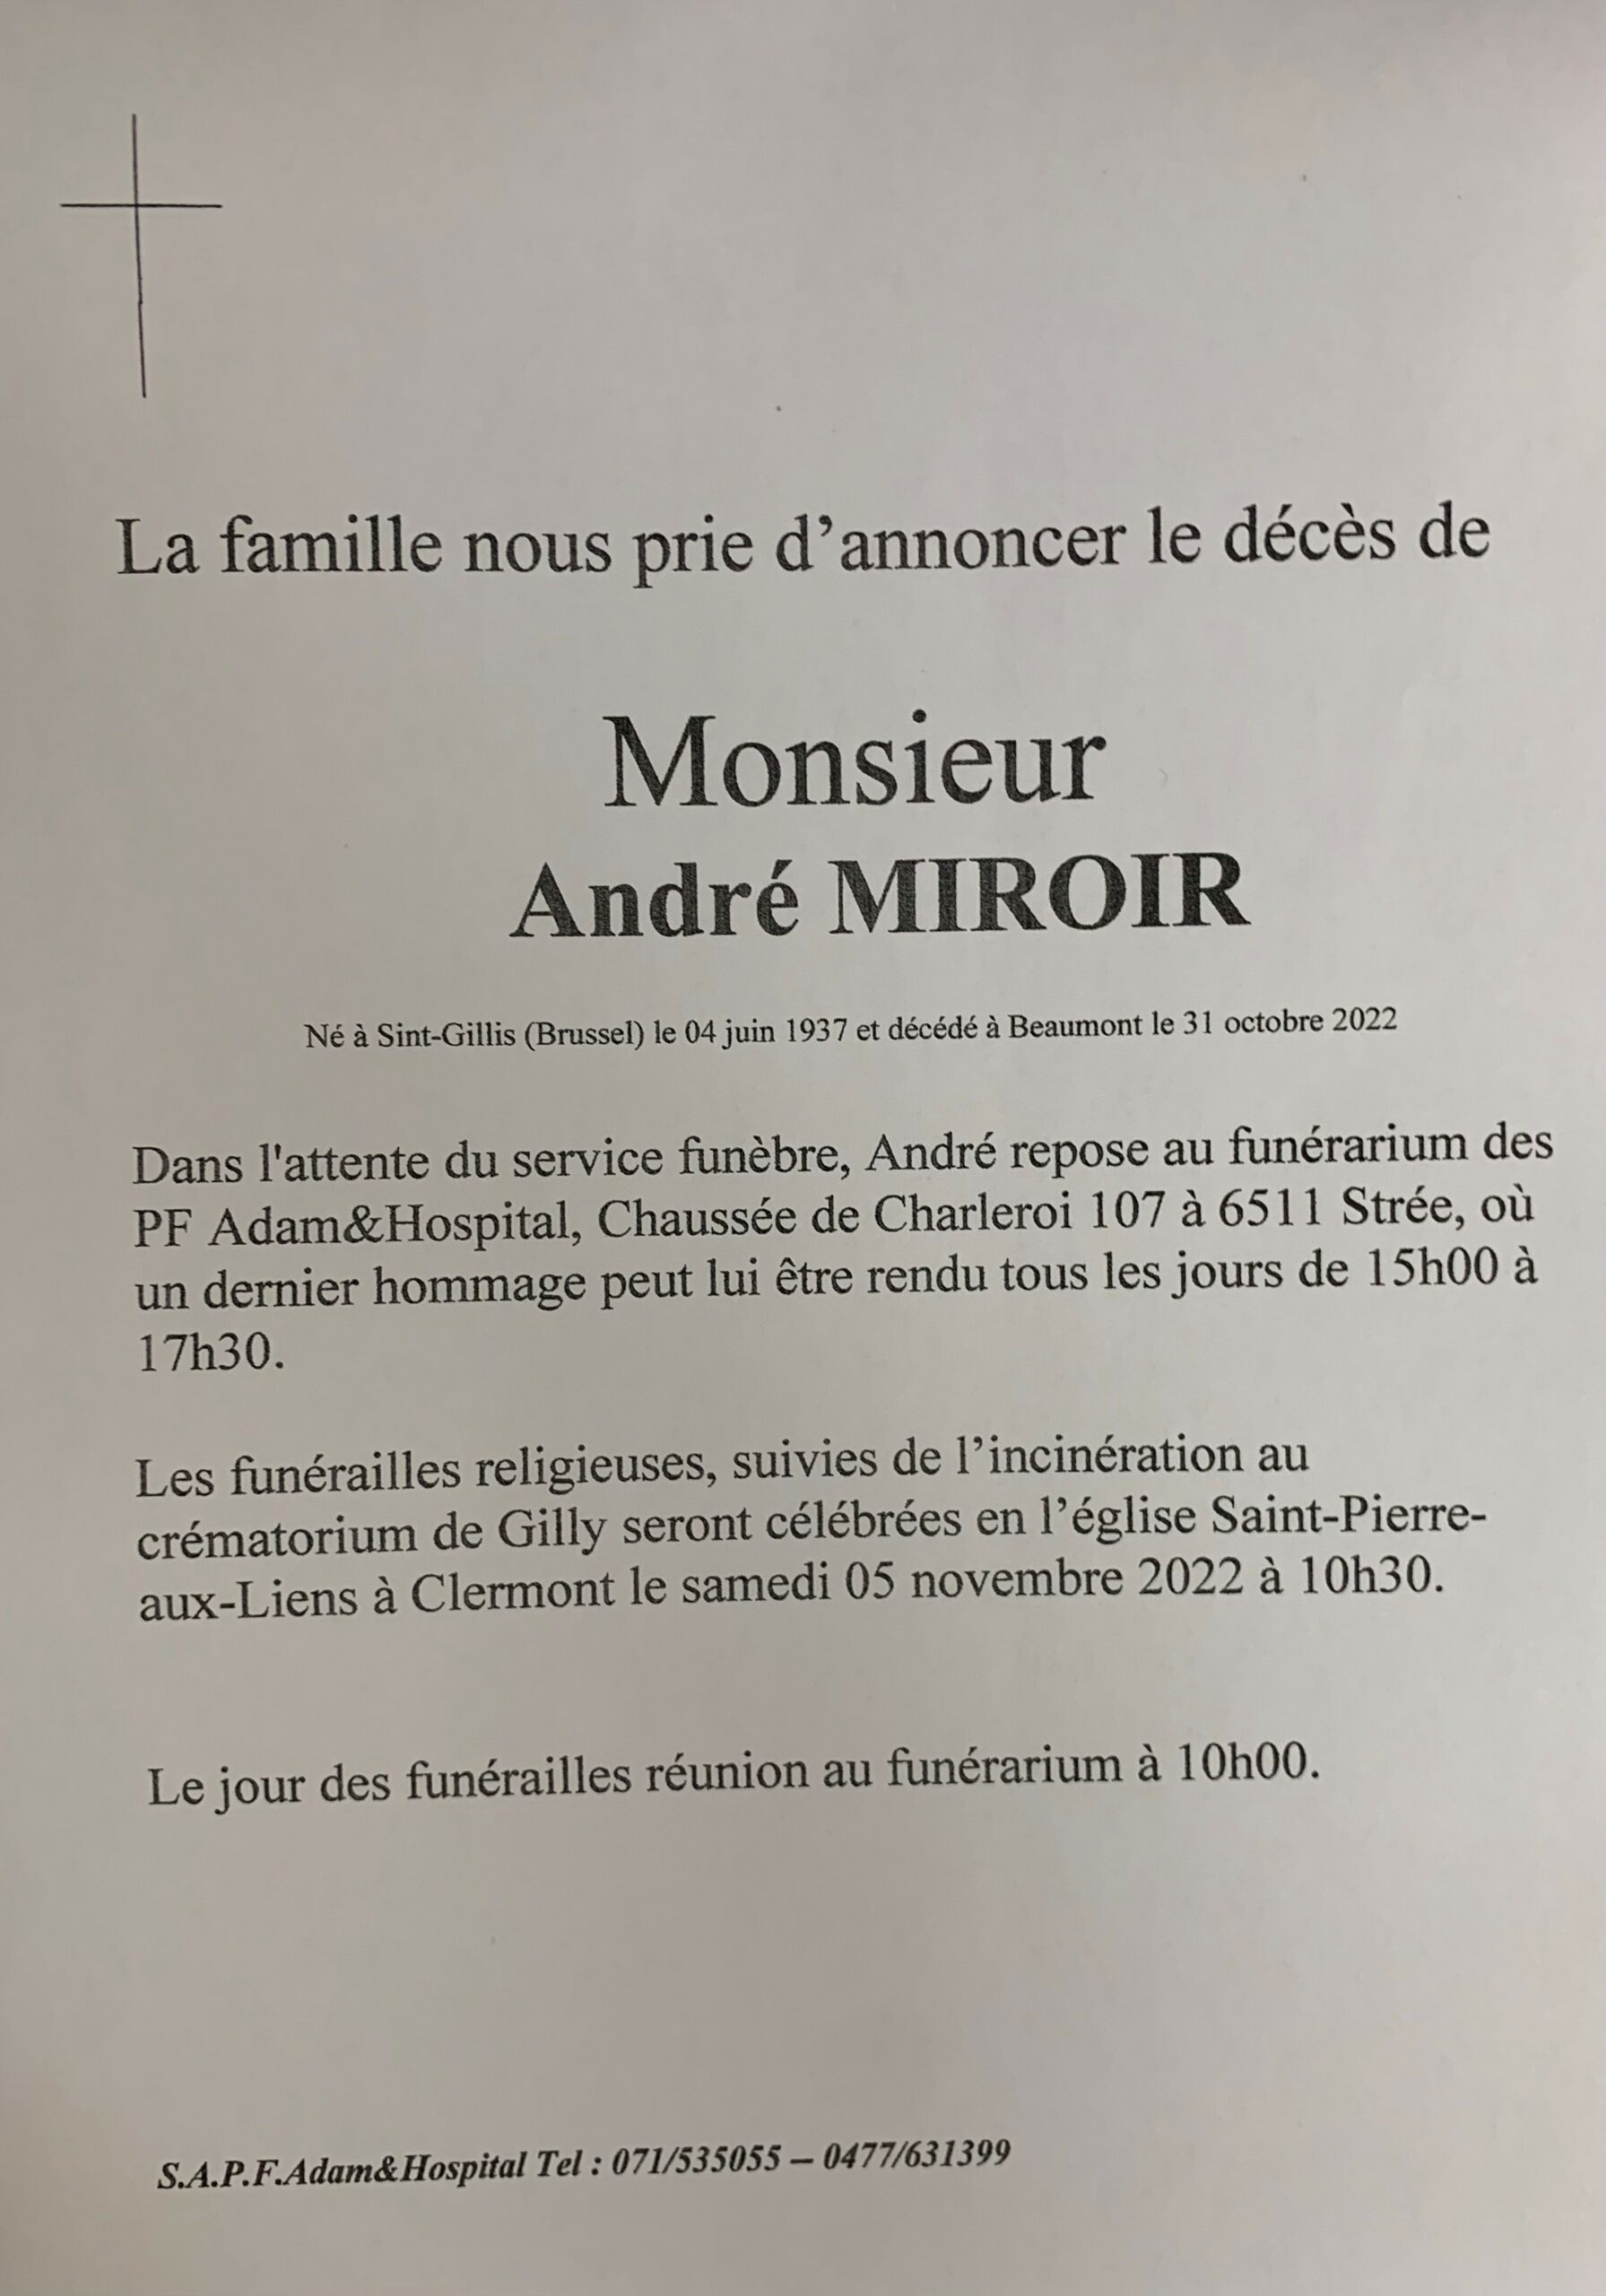 Monsieur Andre Miroir scaled | Funérailles Adam Hospital